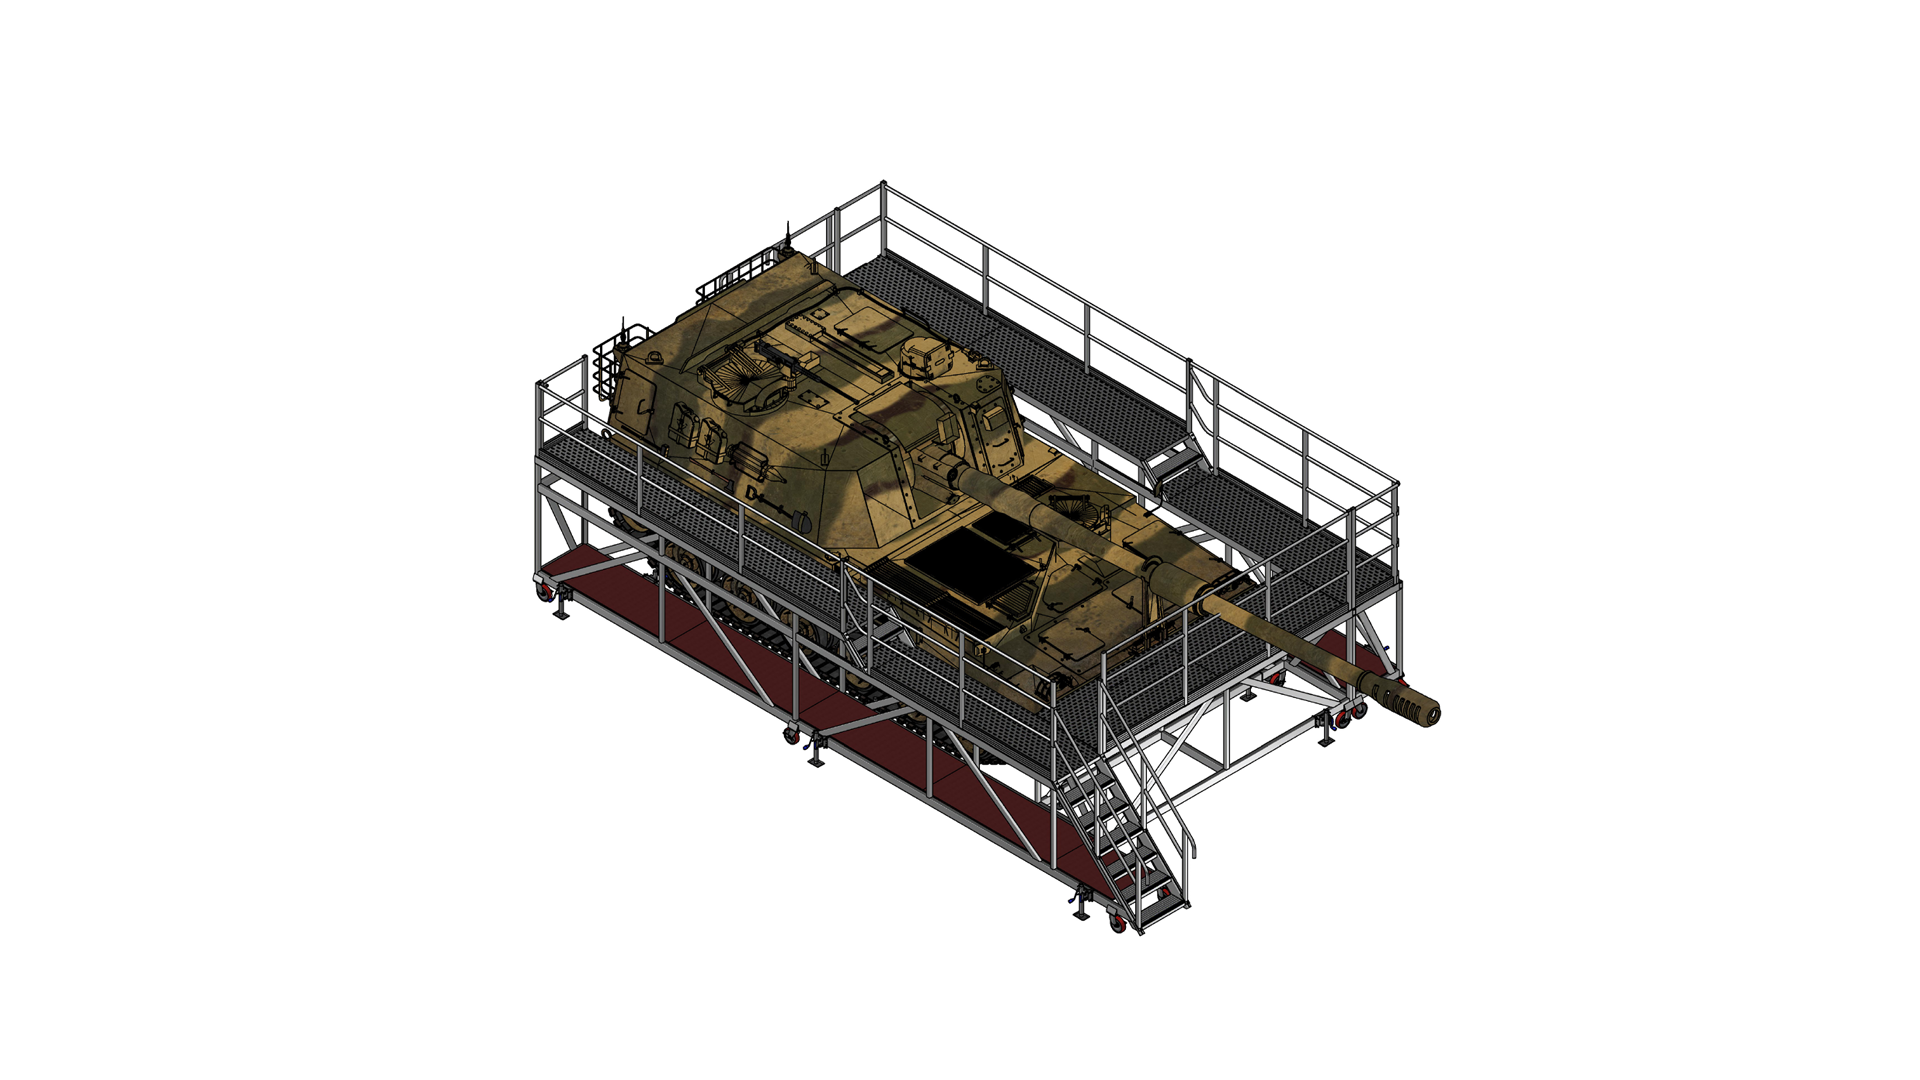 Dual Level Surround Tank Access Platform